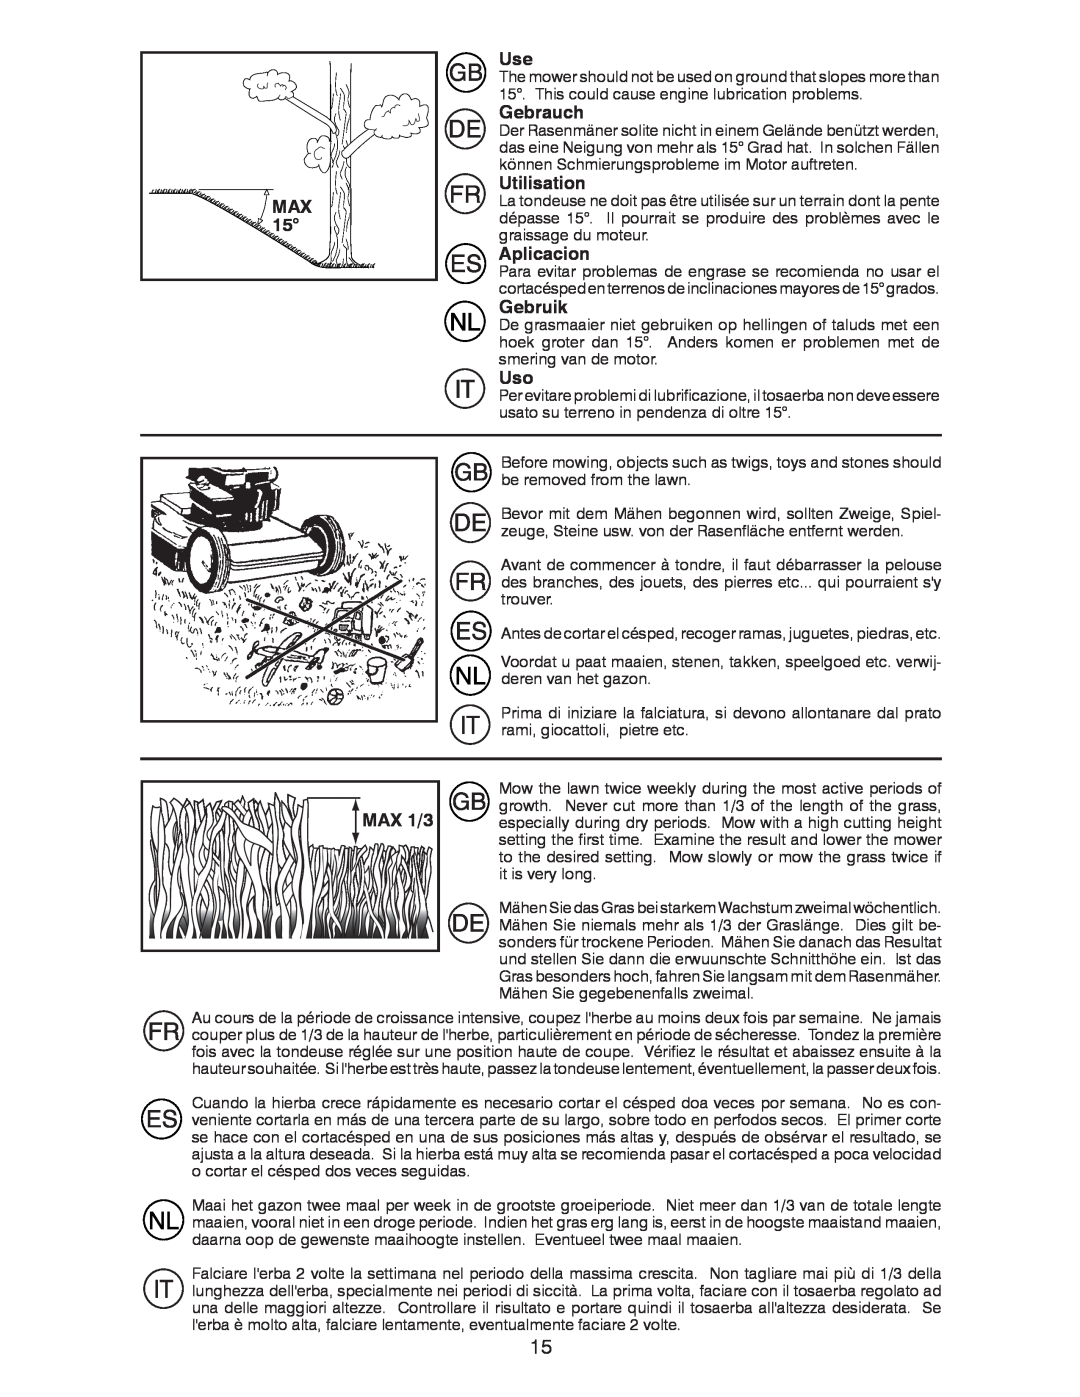 Husqvarna J 55L instruction manual Gebrauch, Utilisation, Aplicacion, Gebruik, MAX 1/3 